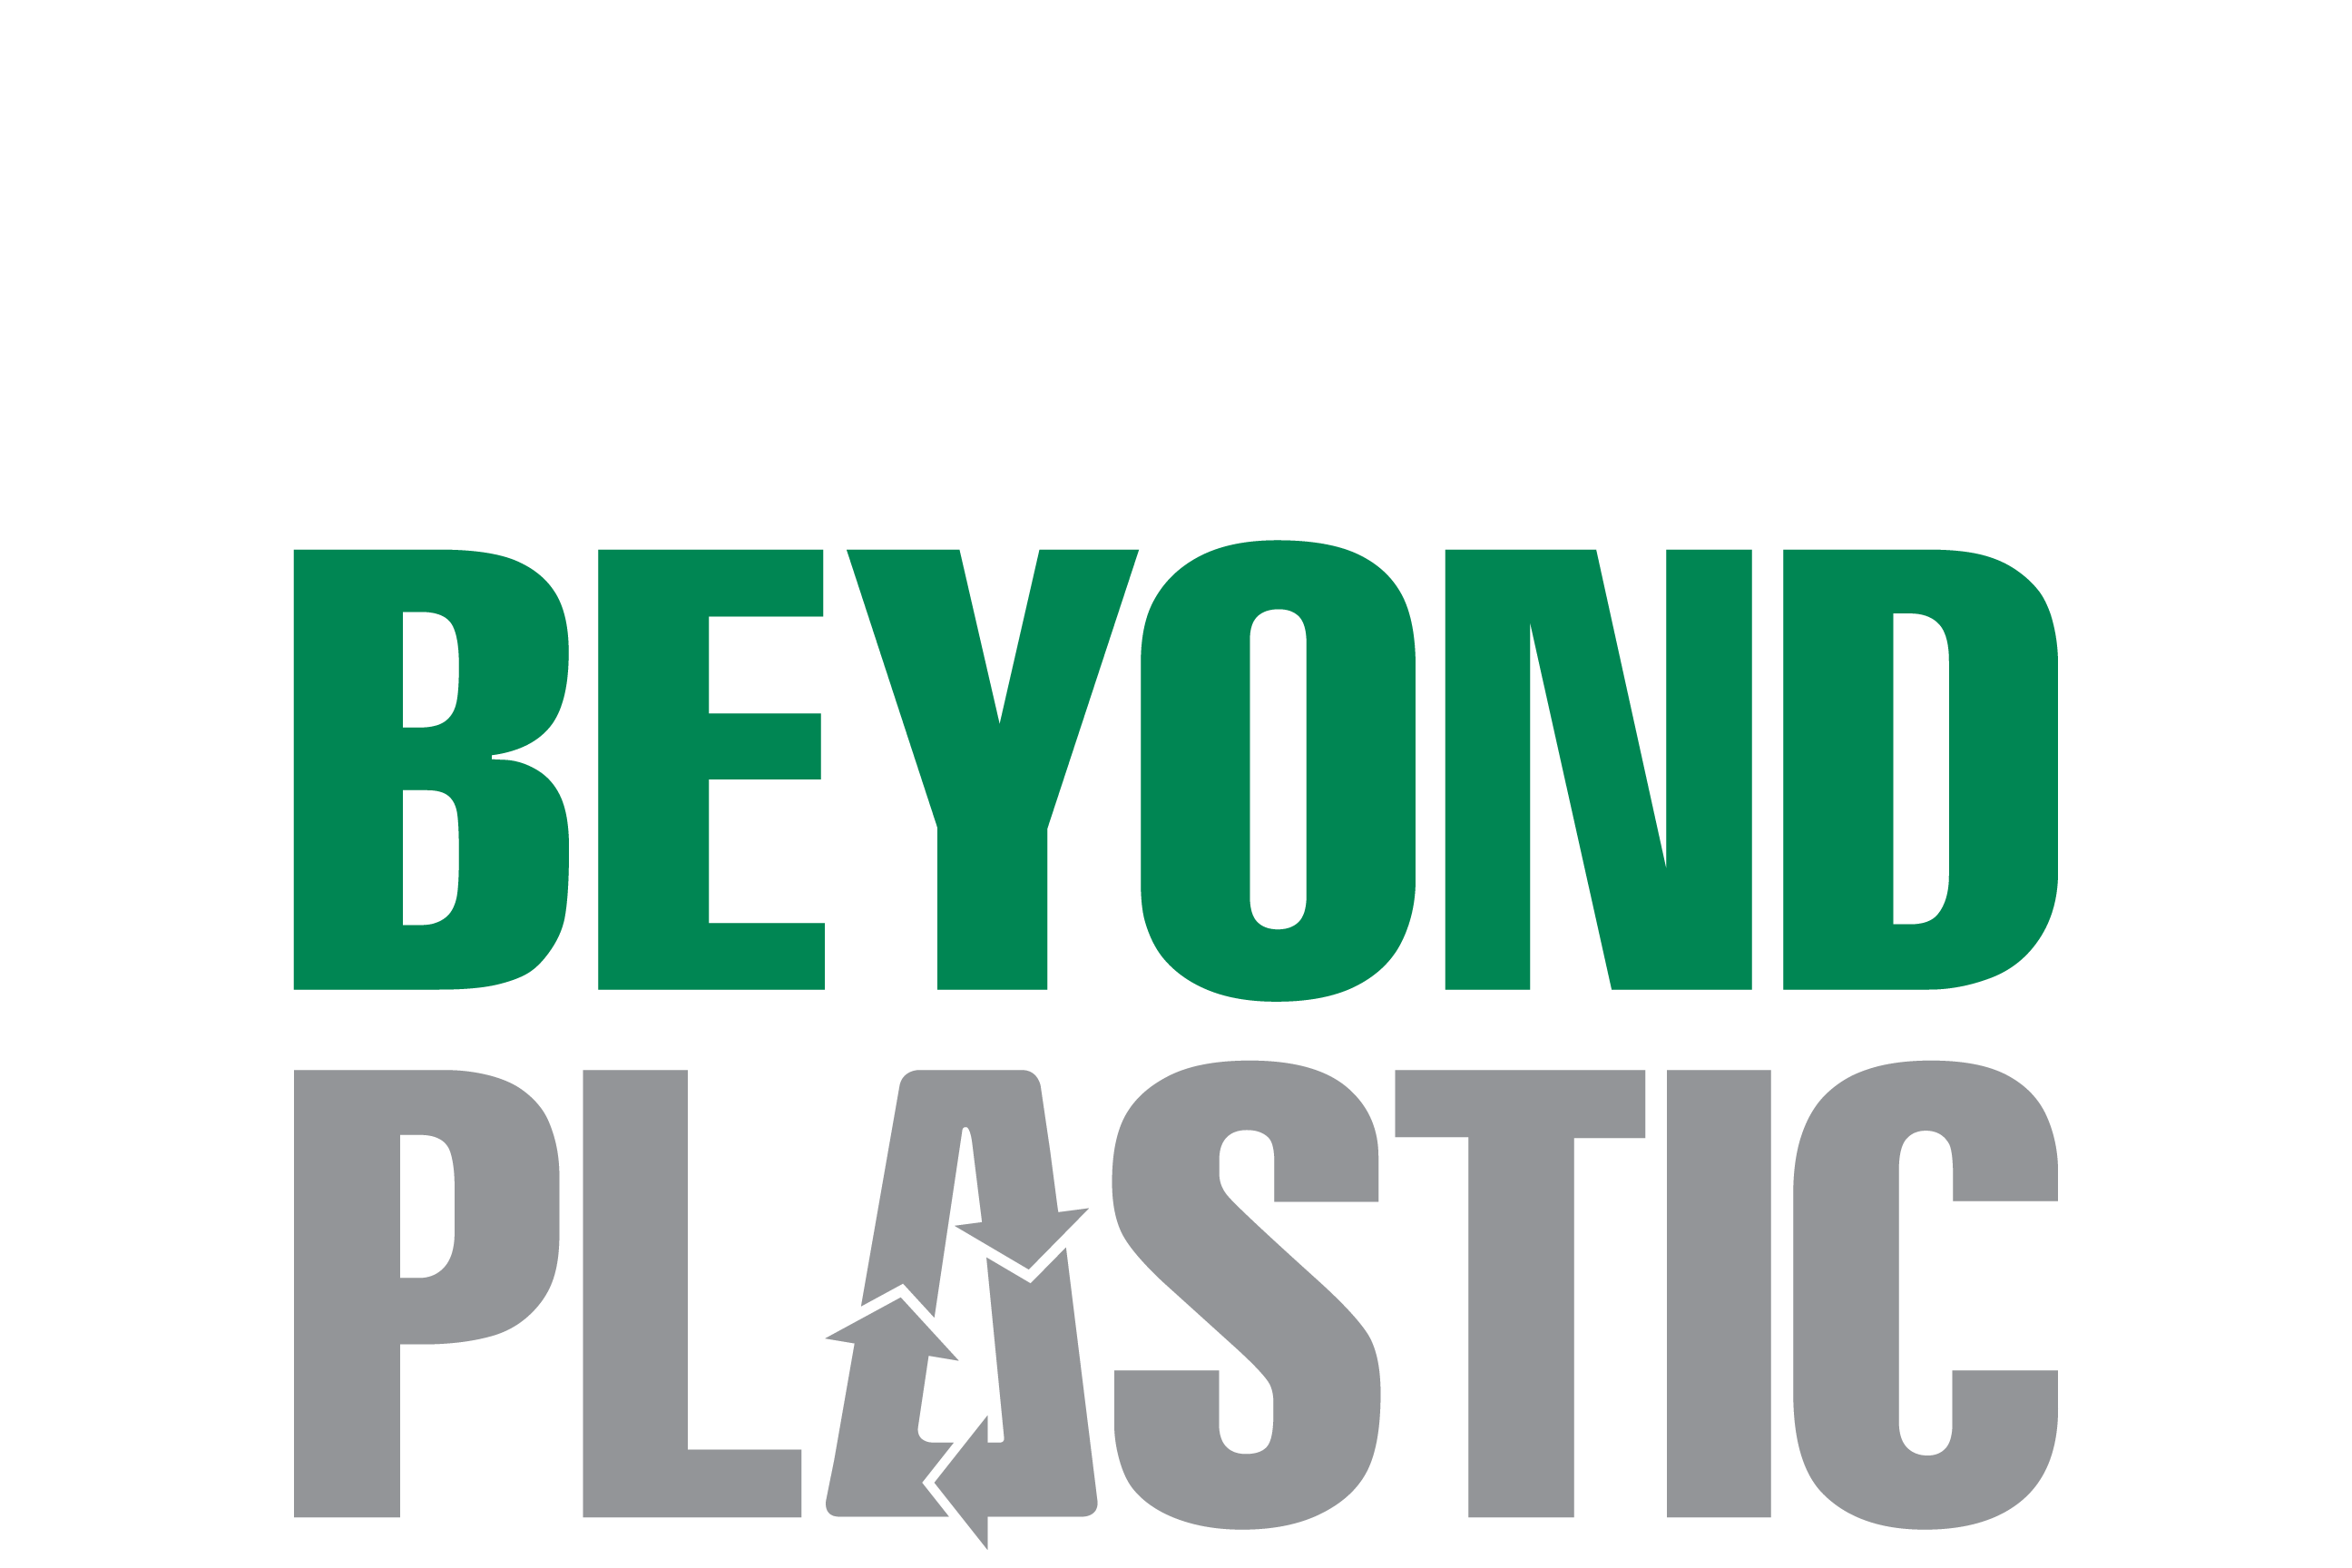 Beyond.com Logo - Beyond Plastic | WashPIRG